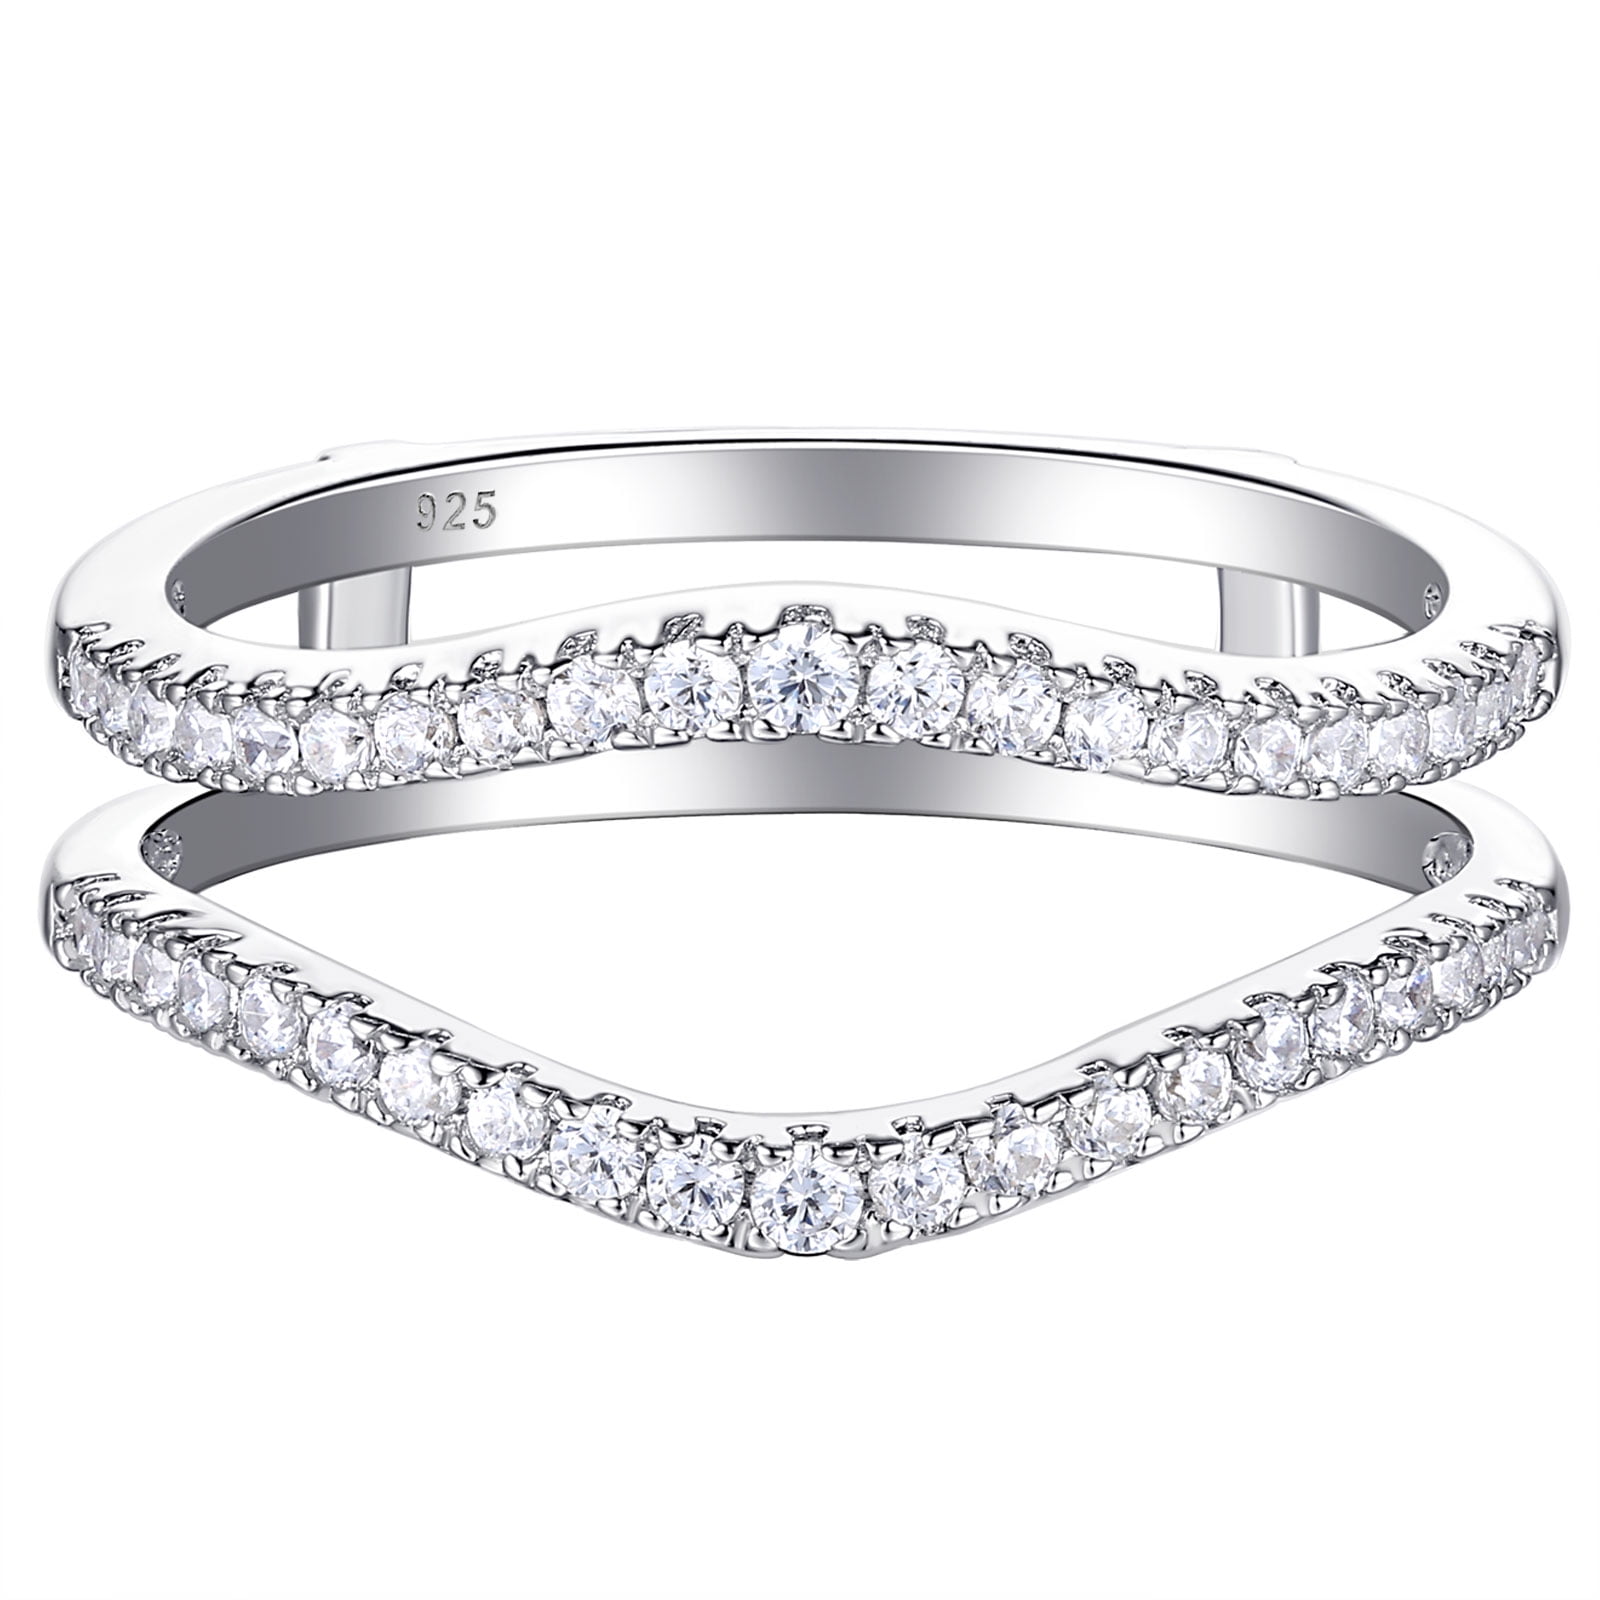 Newshe Engagement Wedding Ring Set AAAAA Cz Guard Enhancers 925 Sterling Silver 